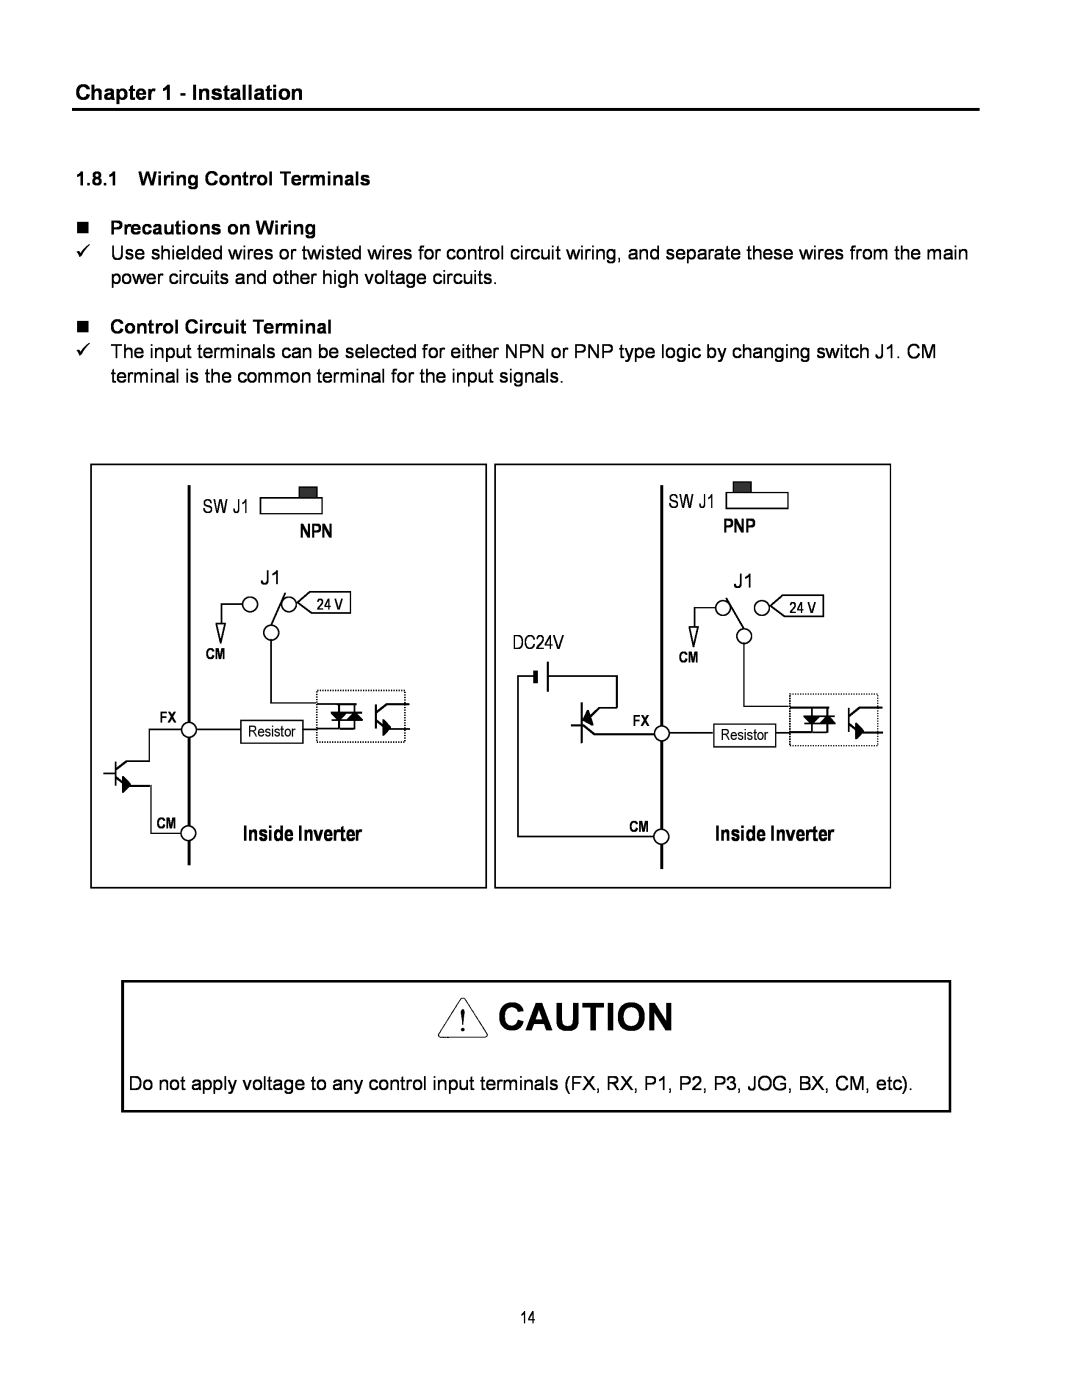 Cleveland Range inverter manual Installation, Inside Inverter, 1.8.1Wiring Control Terminals, Precautions on Wiring, SW J1 